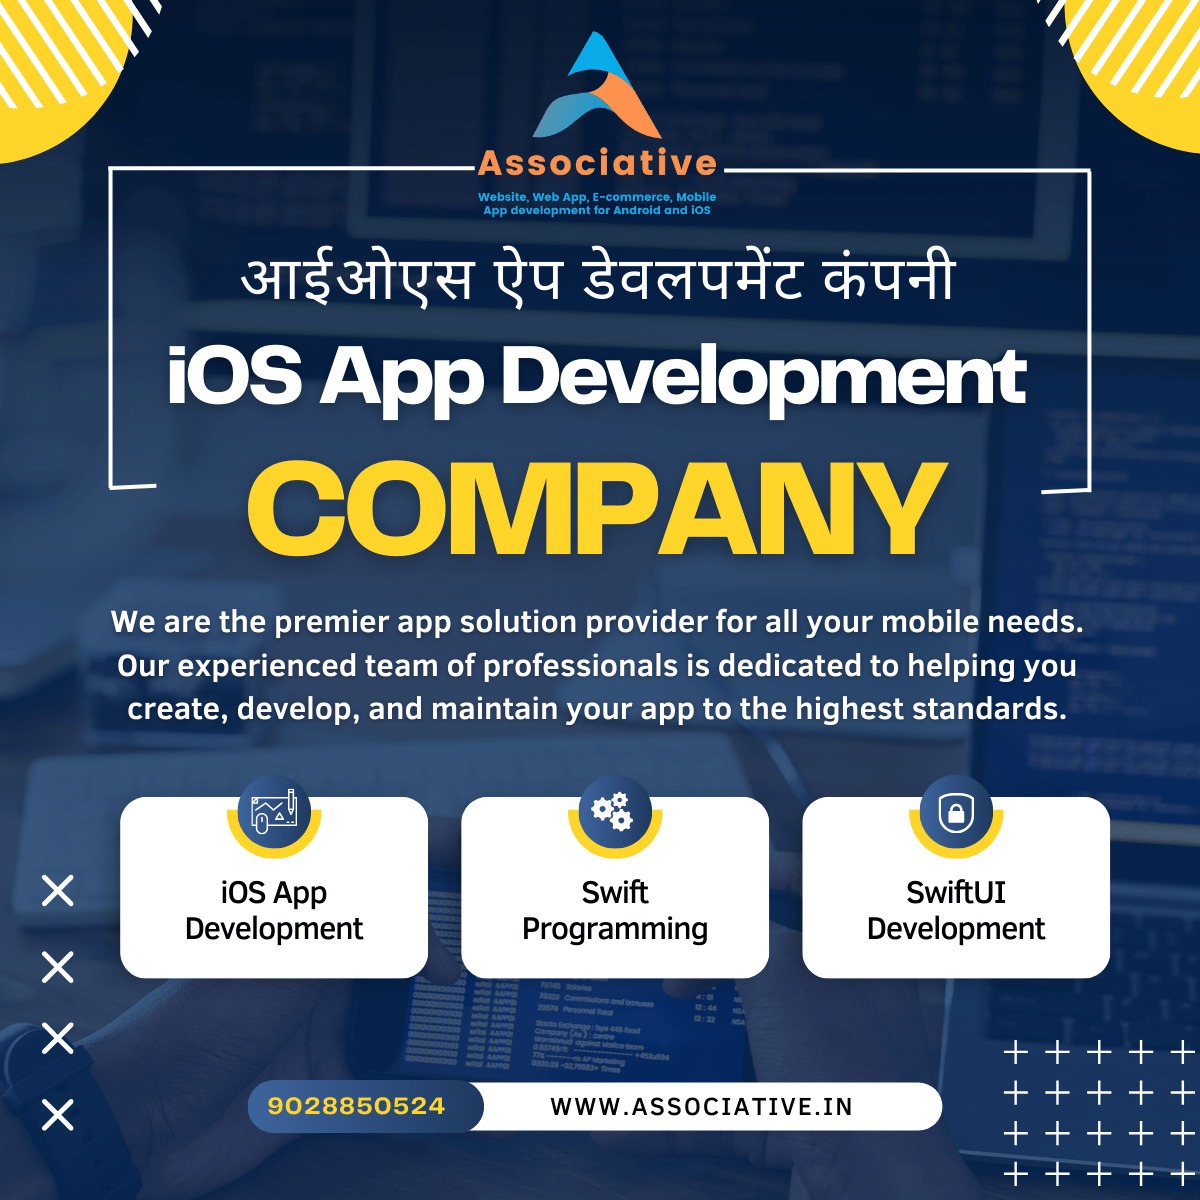 iOS App Development Company

आईओएस ऐप डेवलपमेंट कंपनी